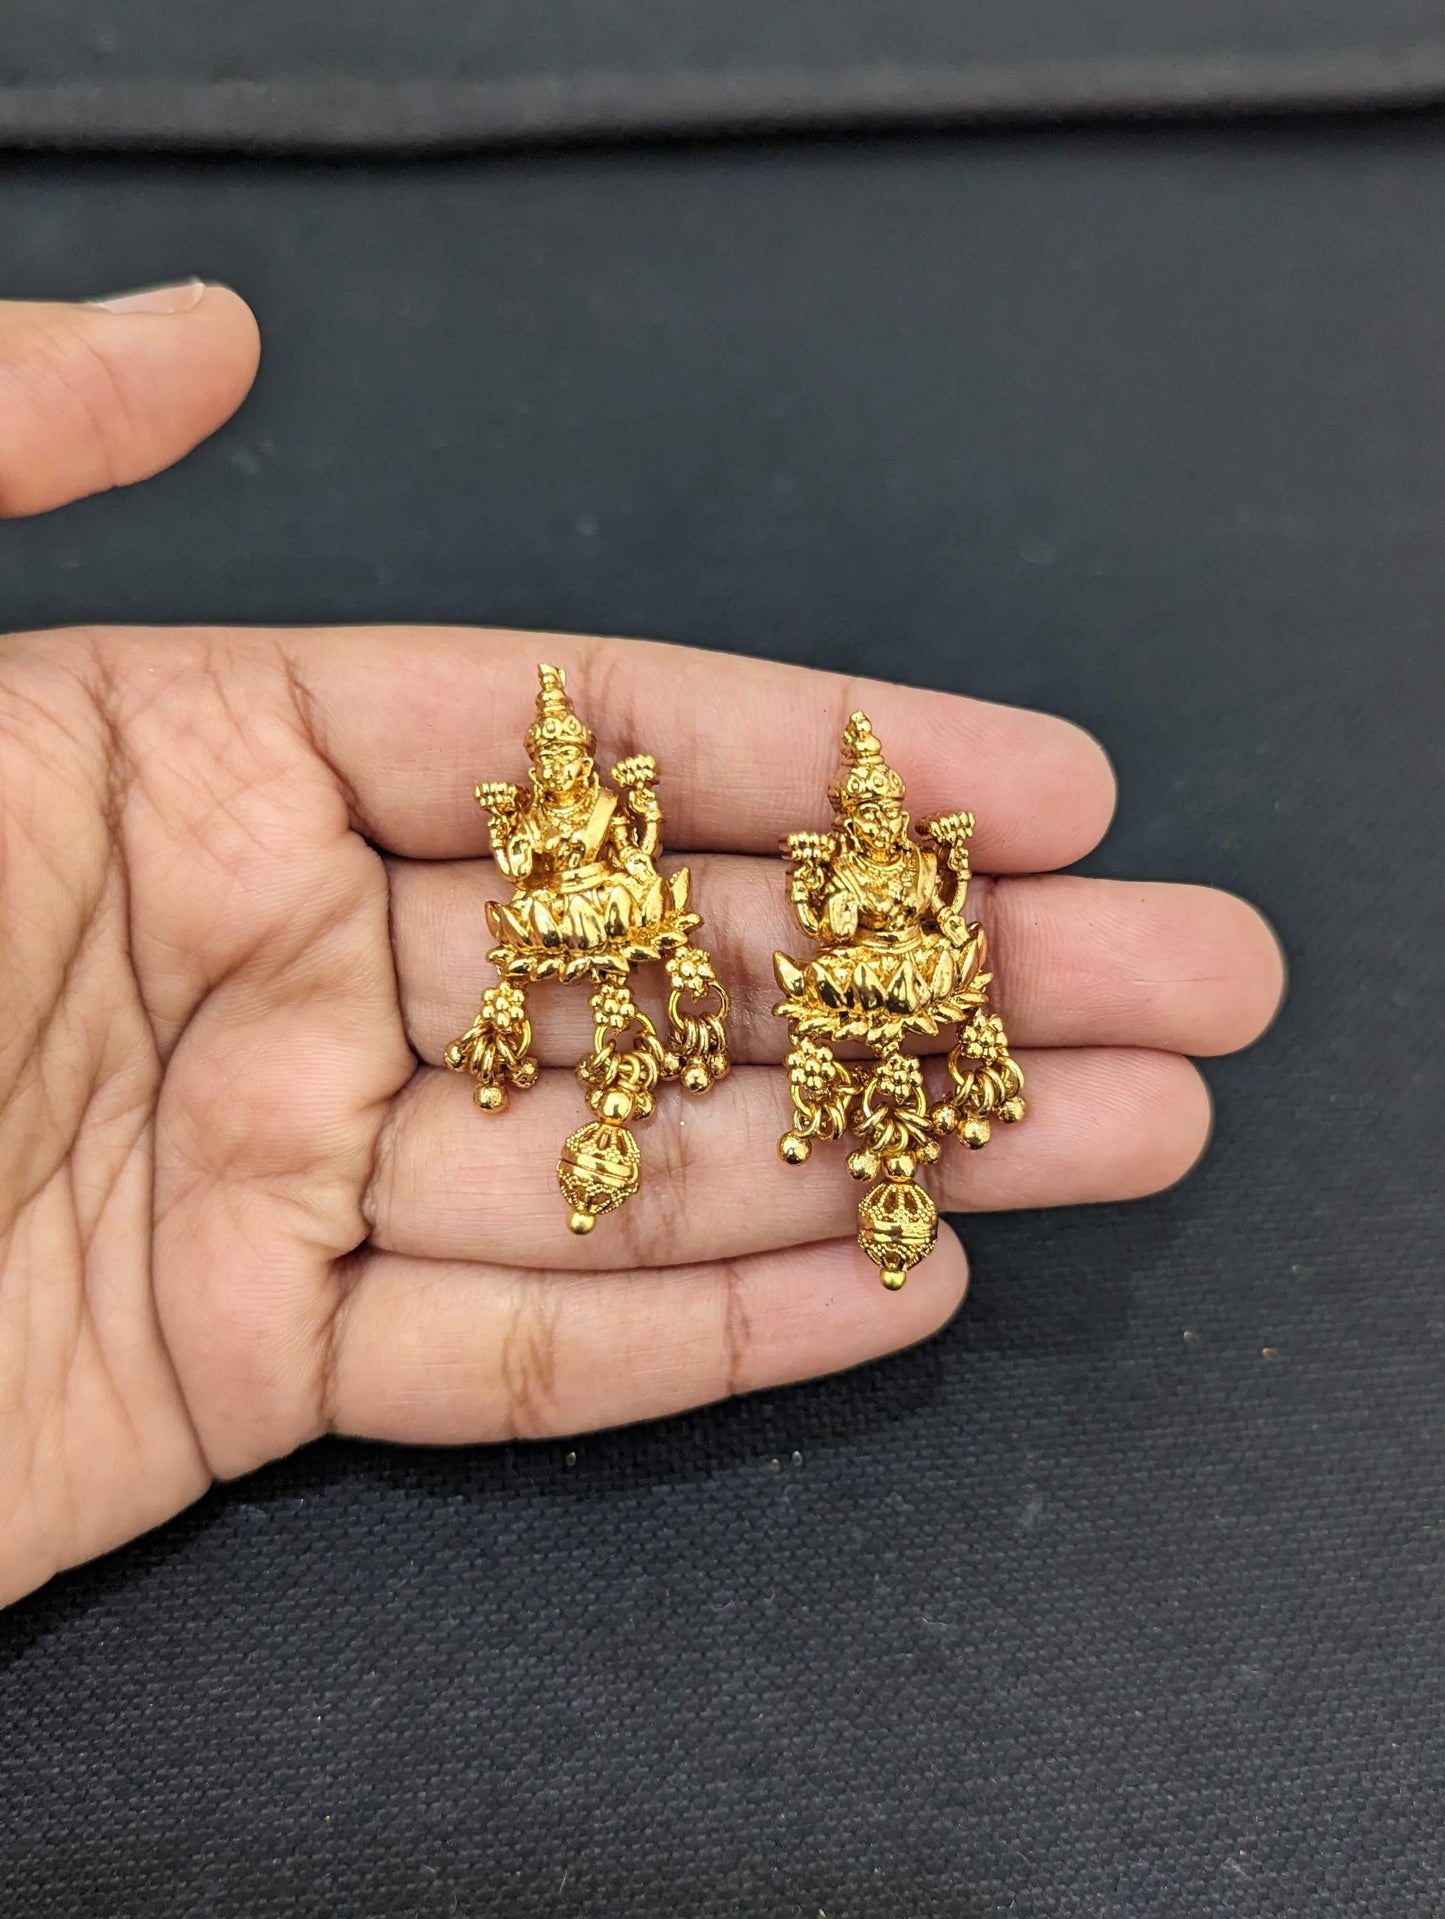 Goddess Lakshmi Pendant Chain and Earrings set - D1